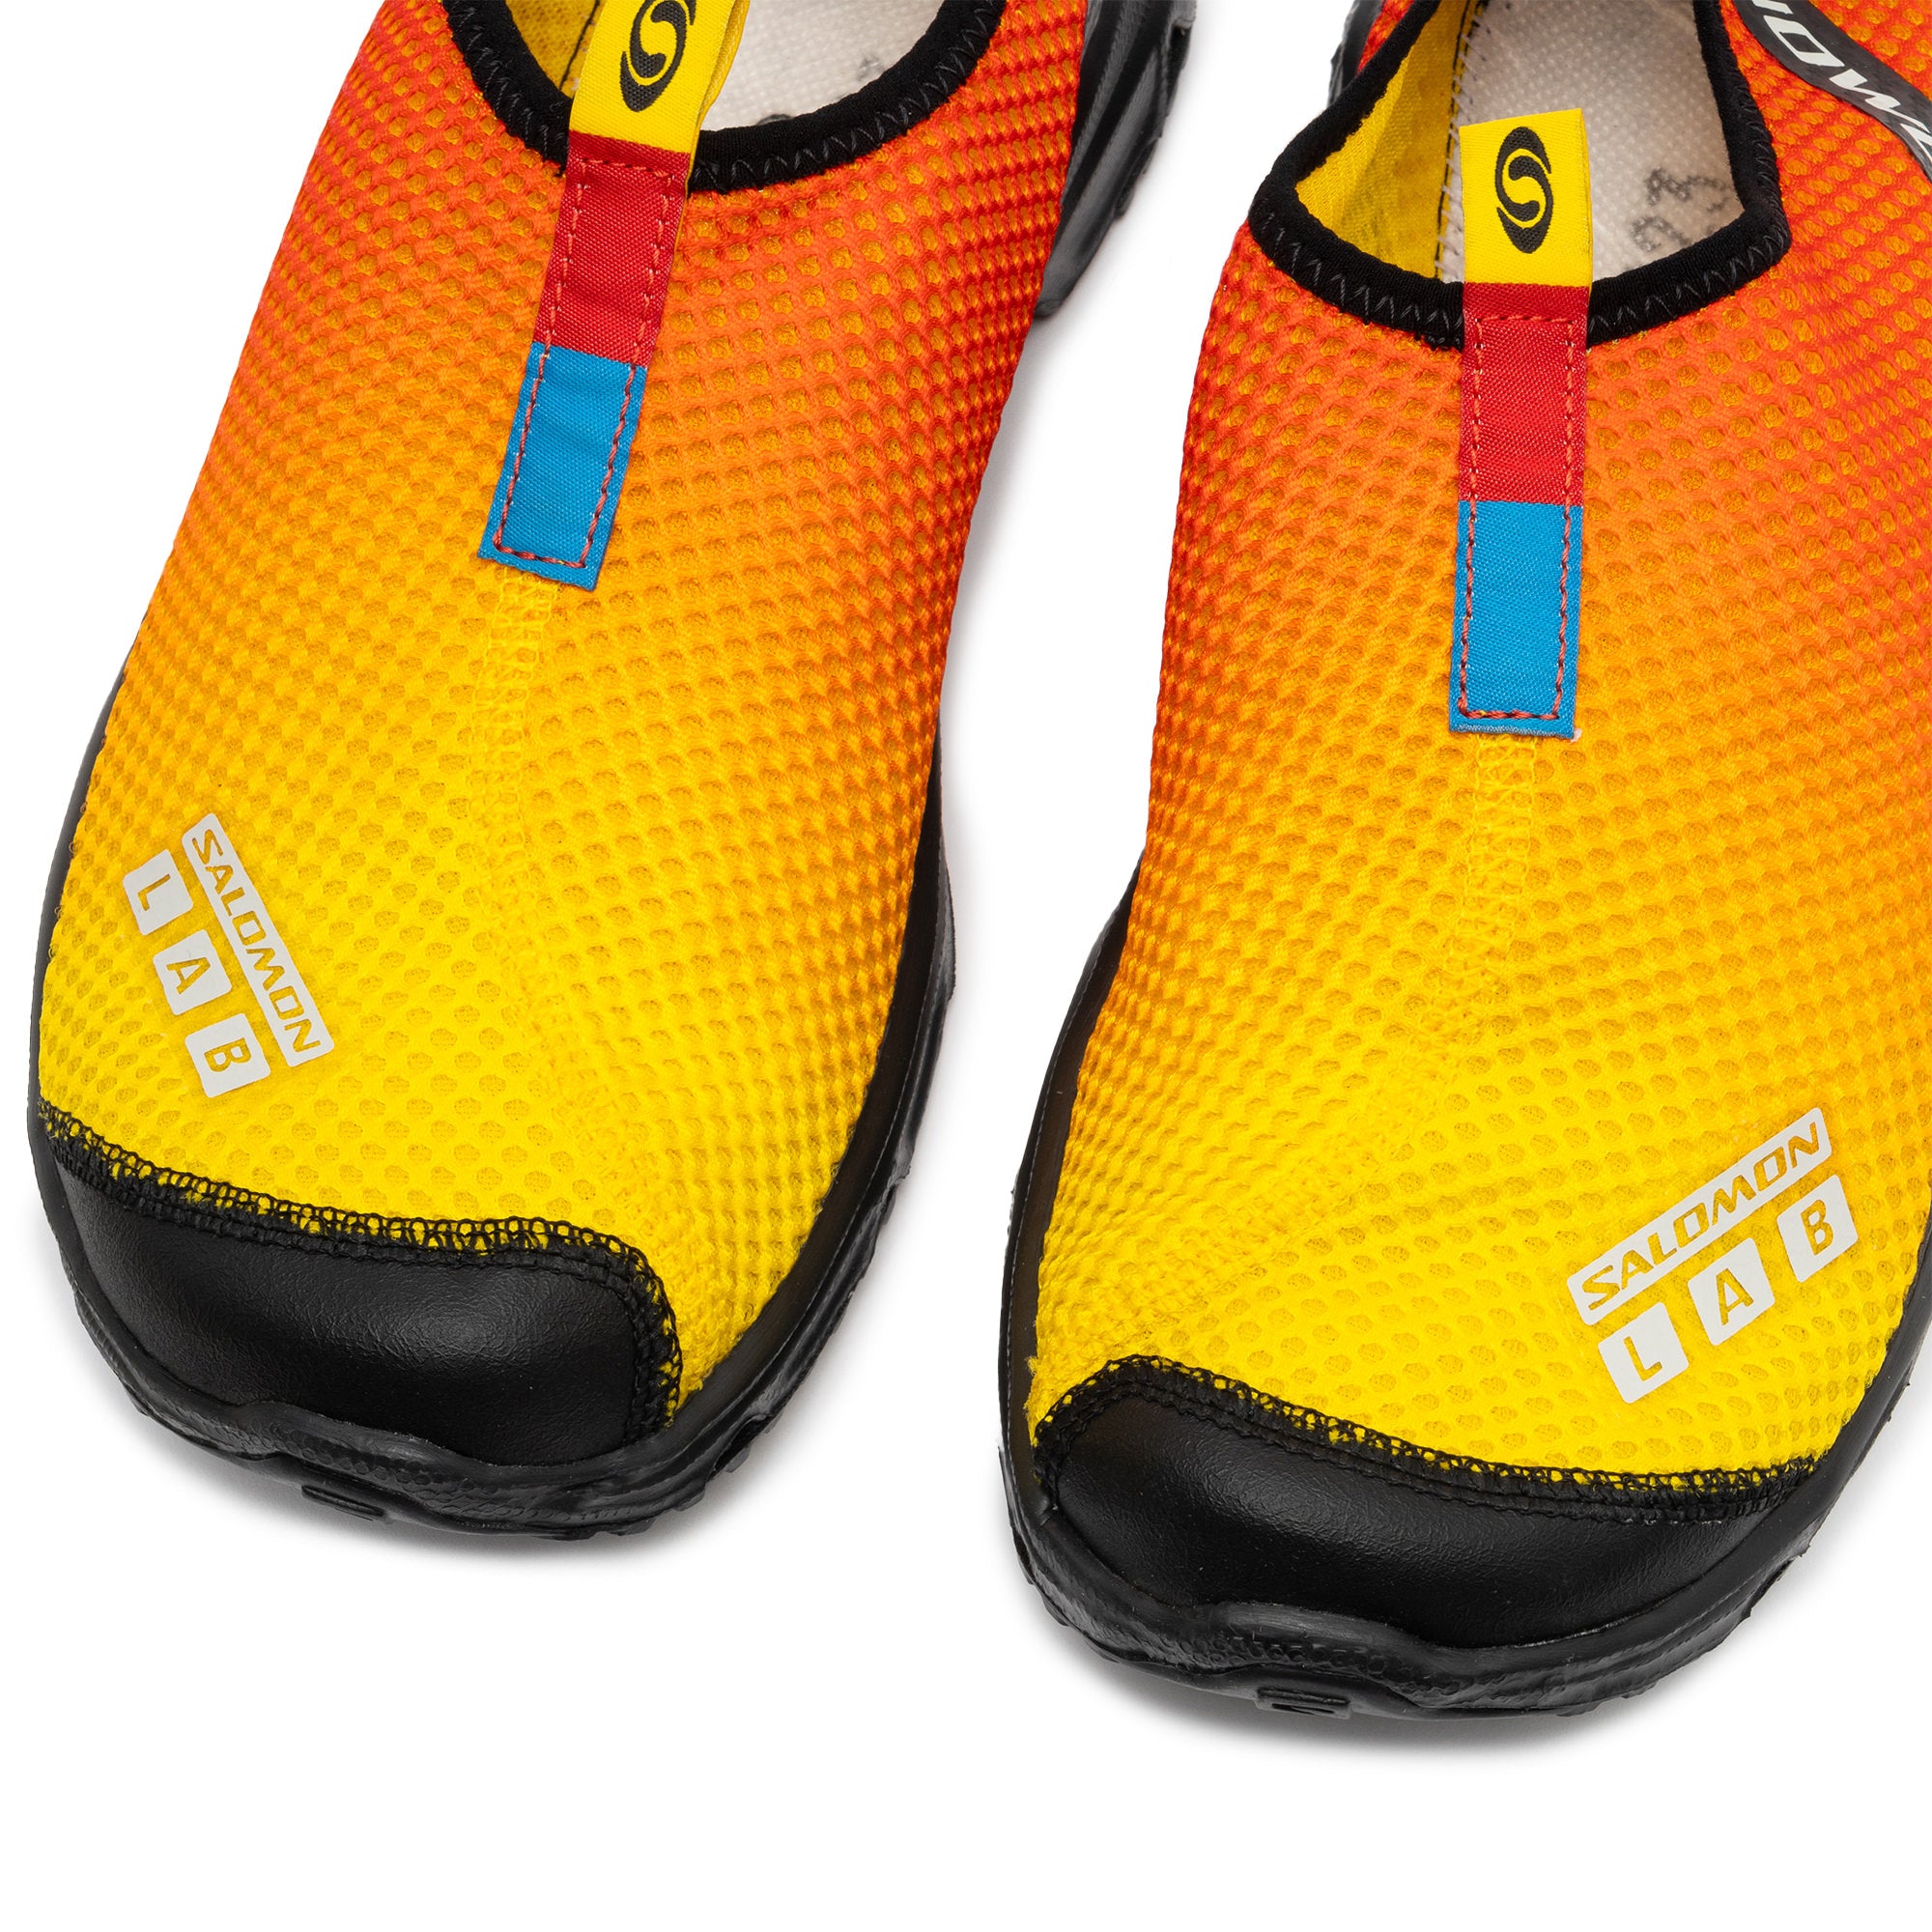 zapatillas de running salomon Shoes ritmo bajo media maratón talla 37.5